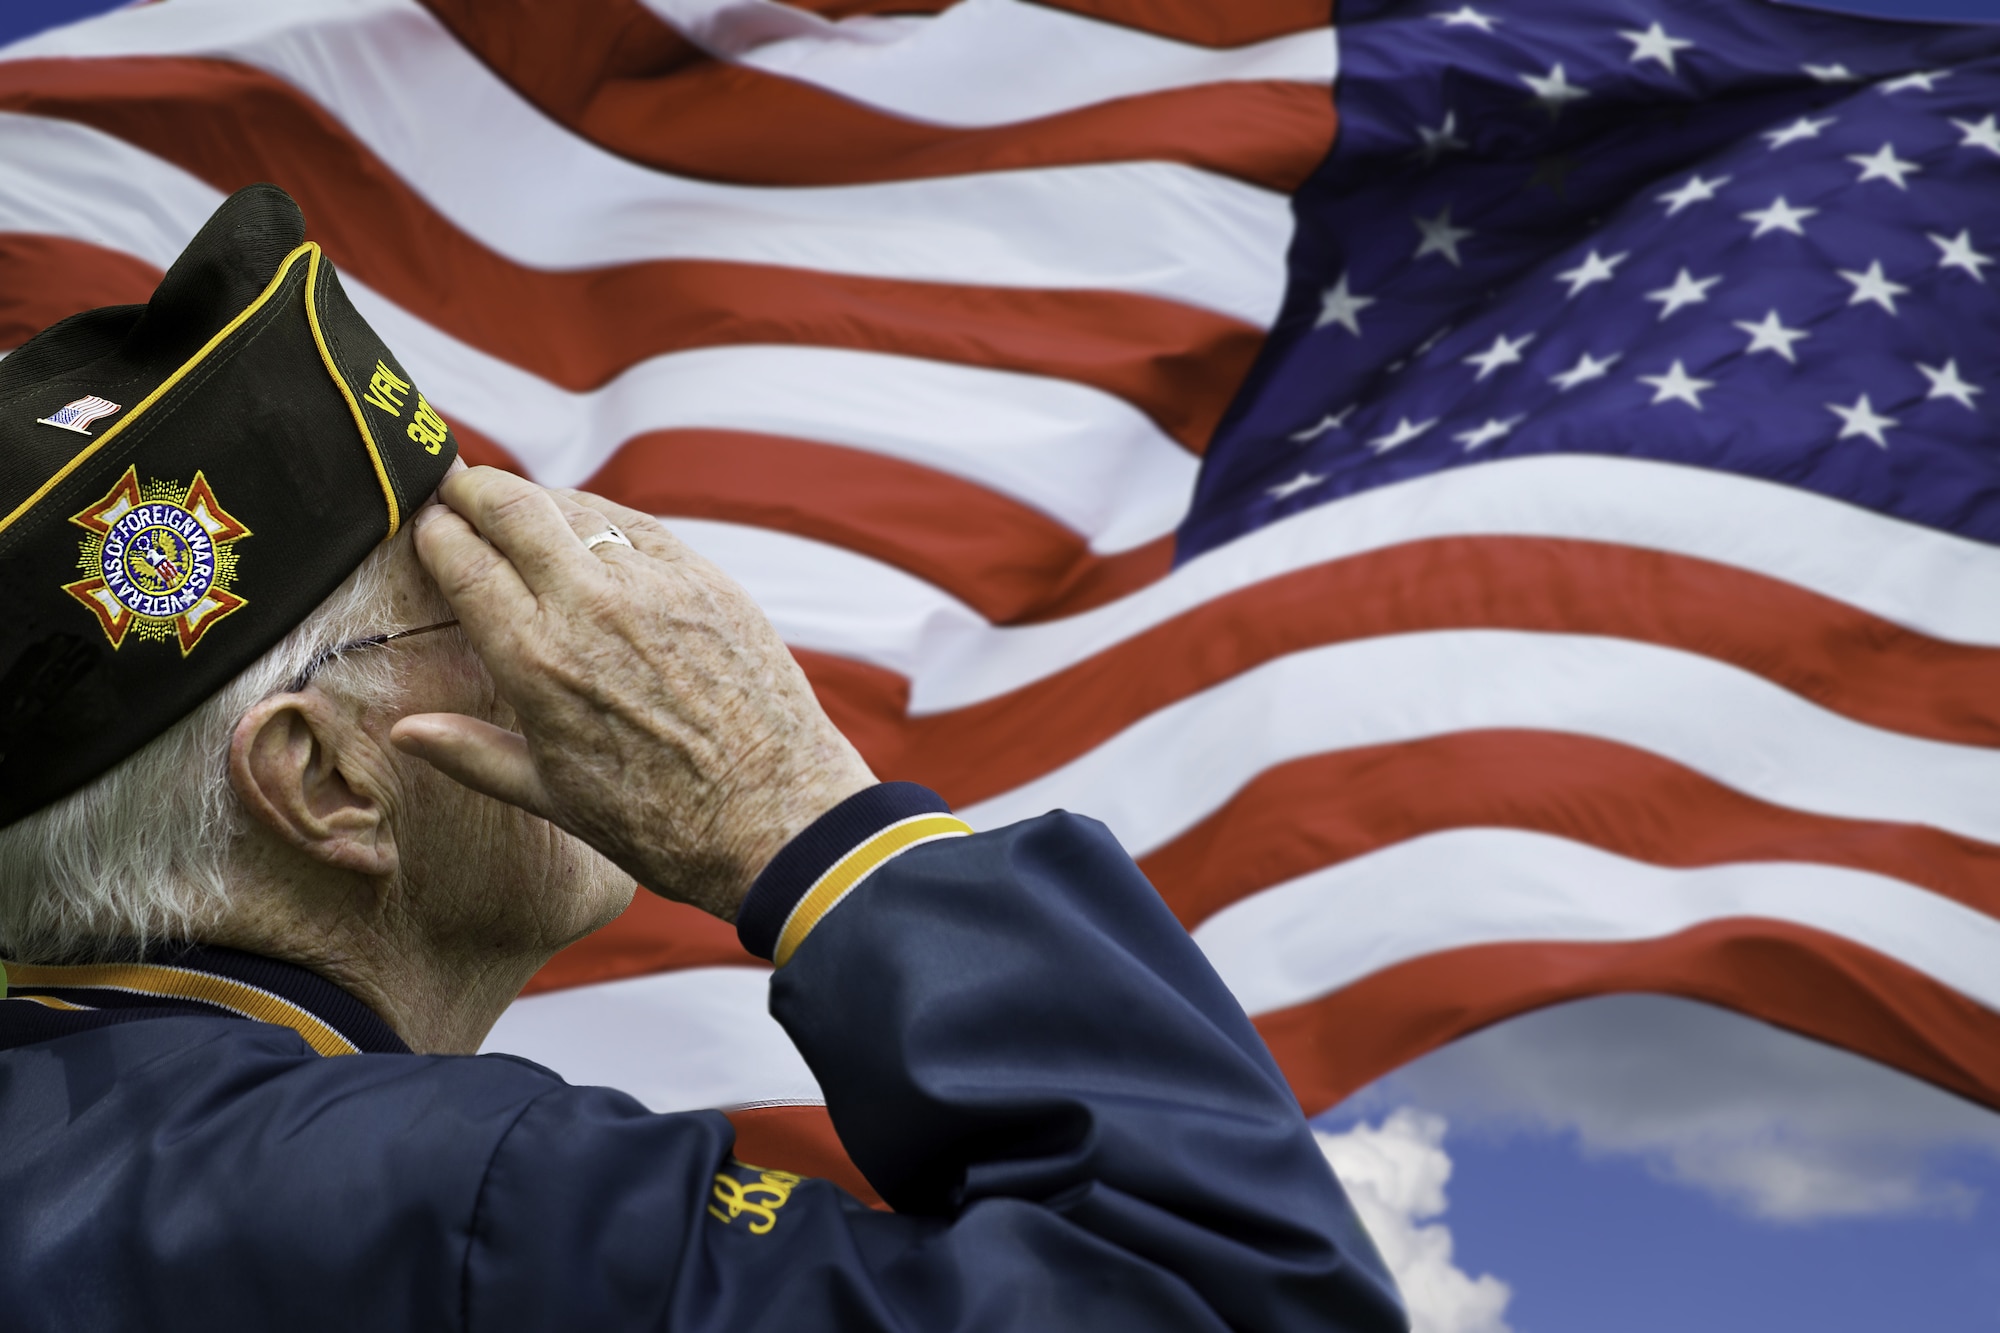 photo shows a veteran saluting the U.S. flag